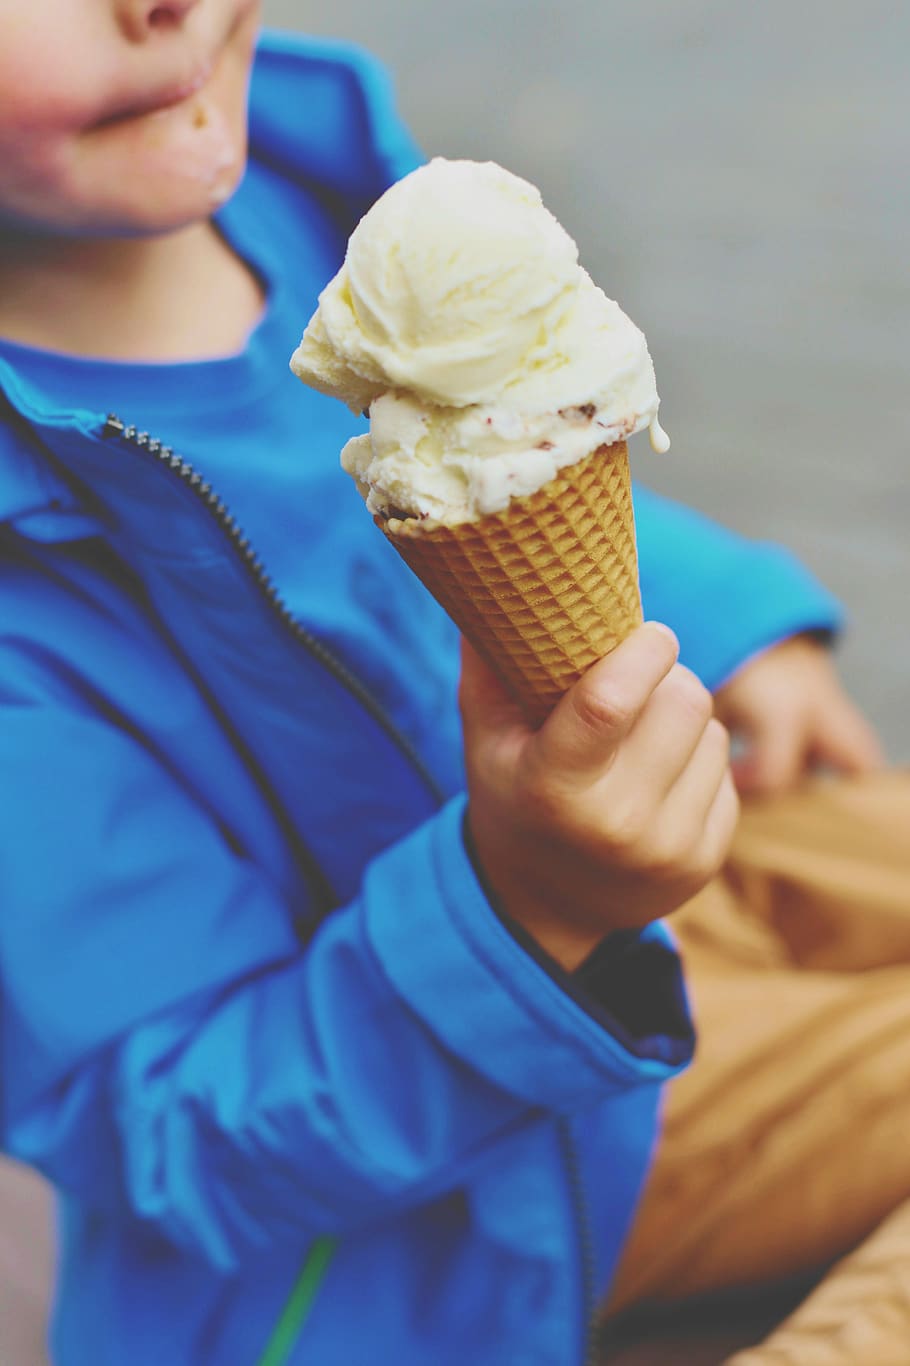 ice, ice cream cone, ice cream, child, hand, child's hand, eat, delicious, benefit from, lick